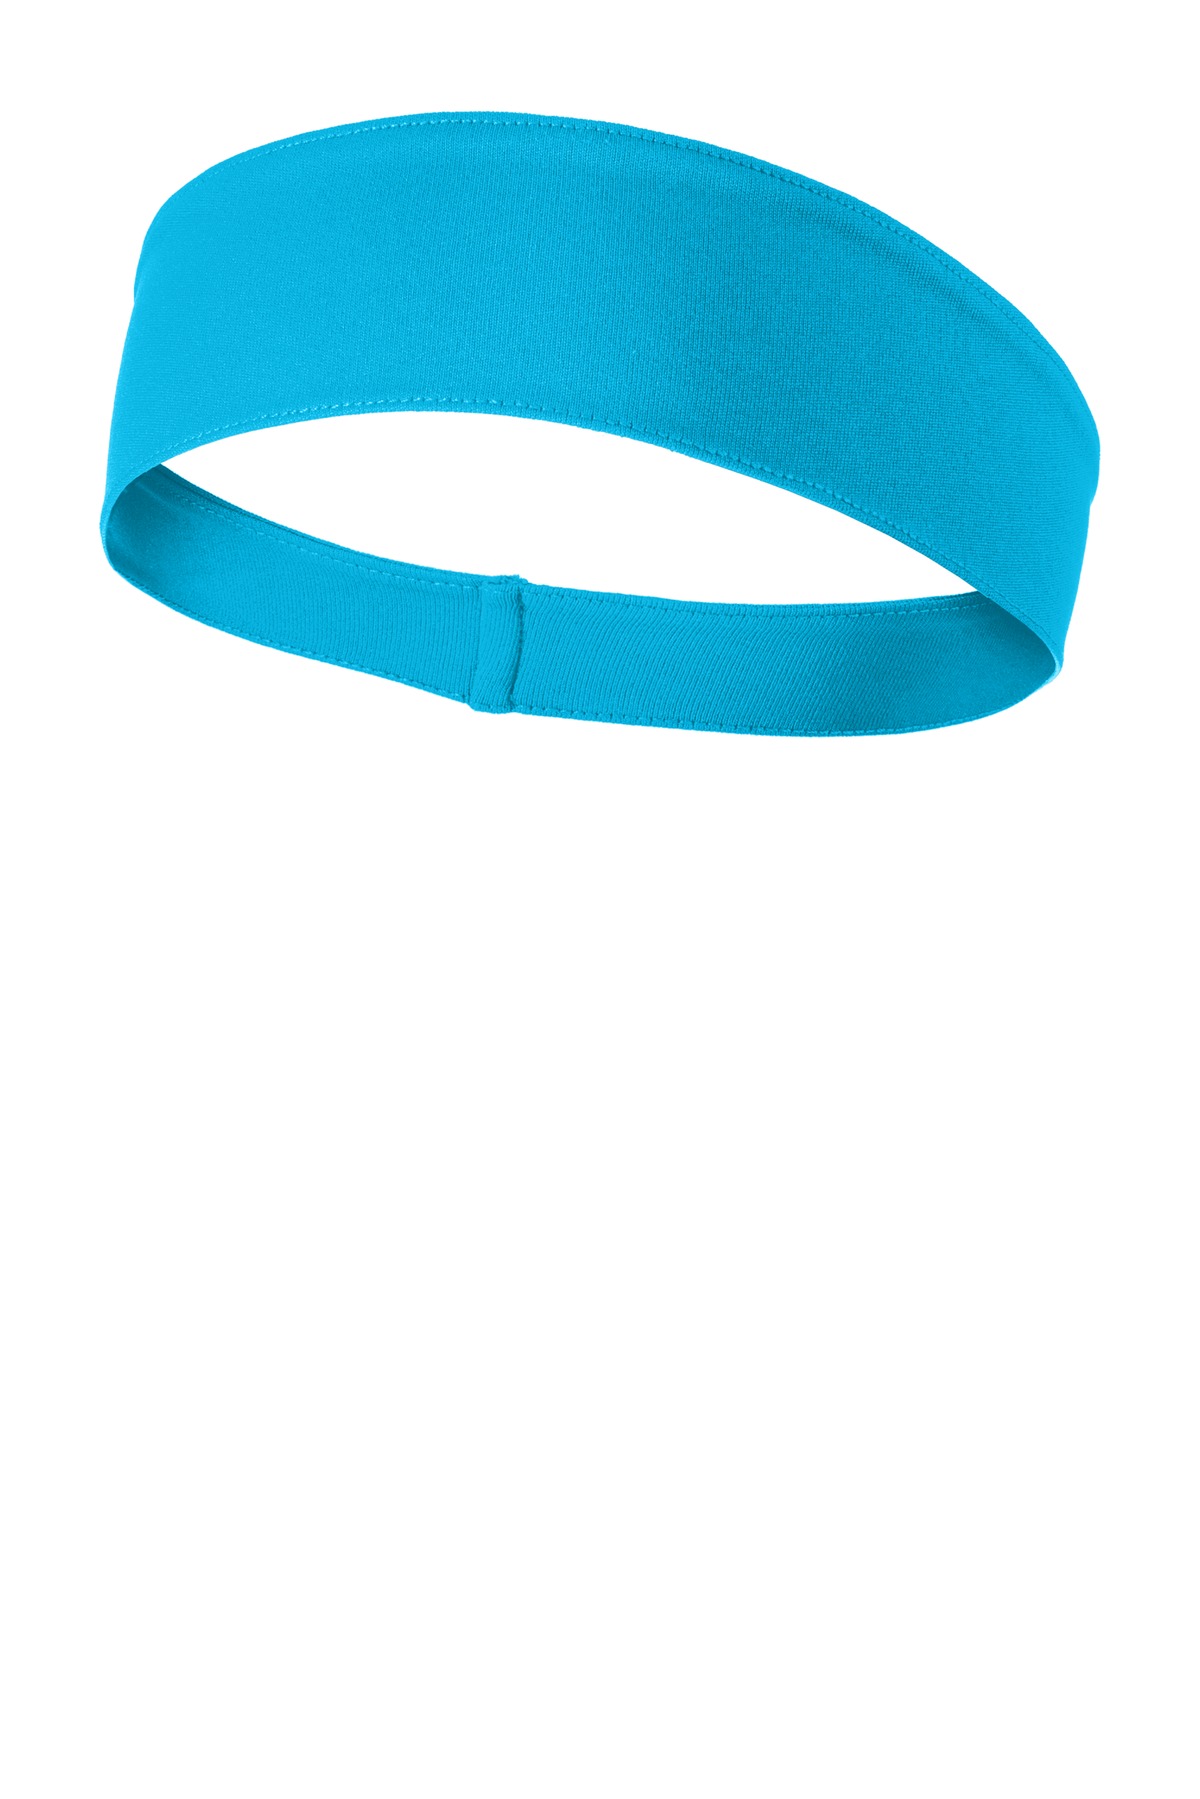 Sport-Tek Hospitality Accessories ® PosiCharge® Competitor Headband.-Sport-Tek